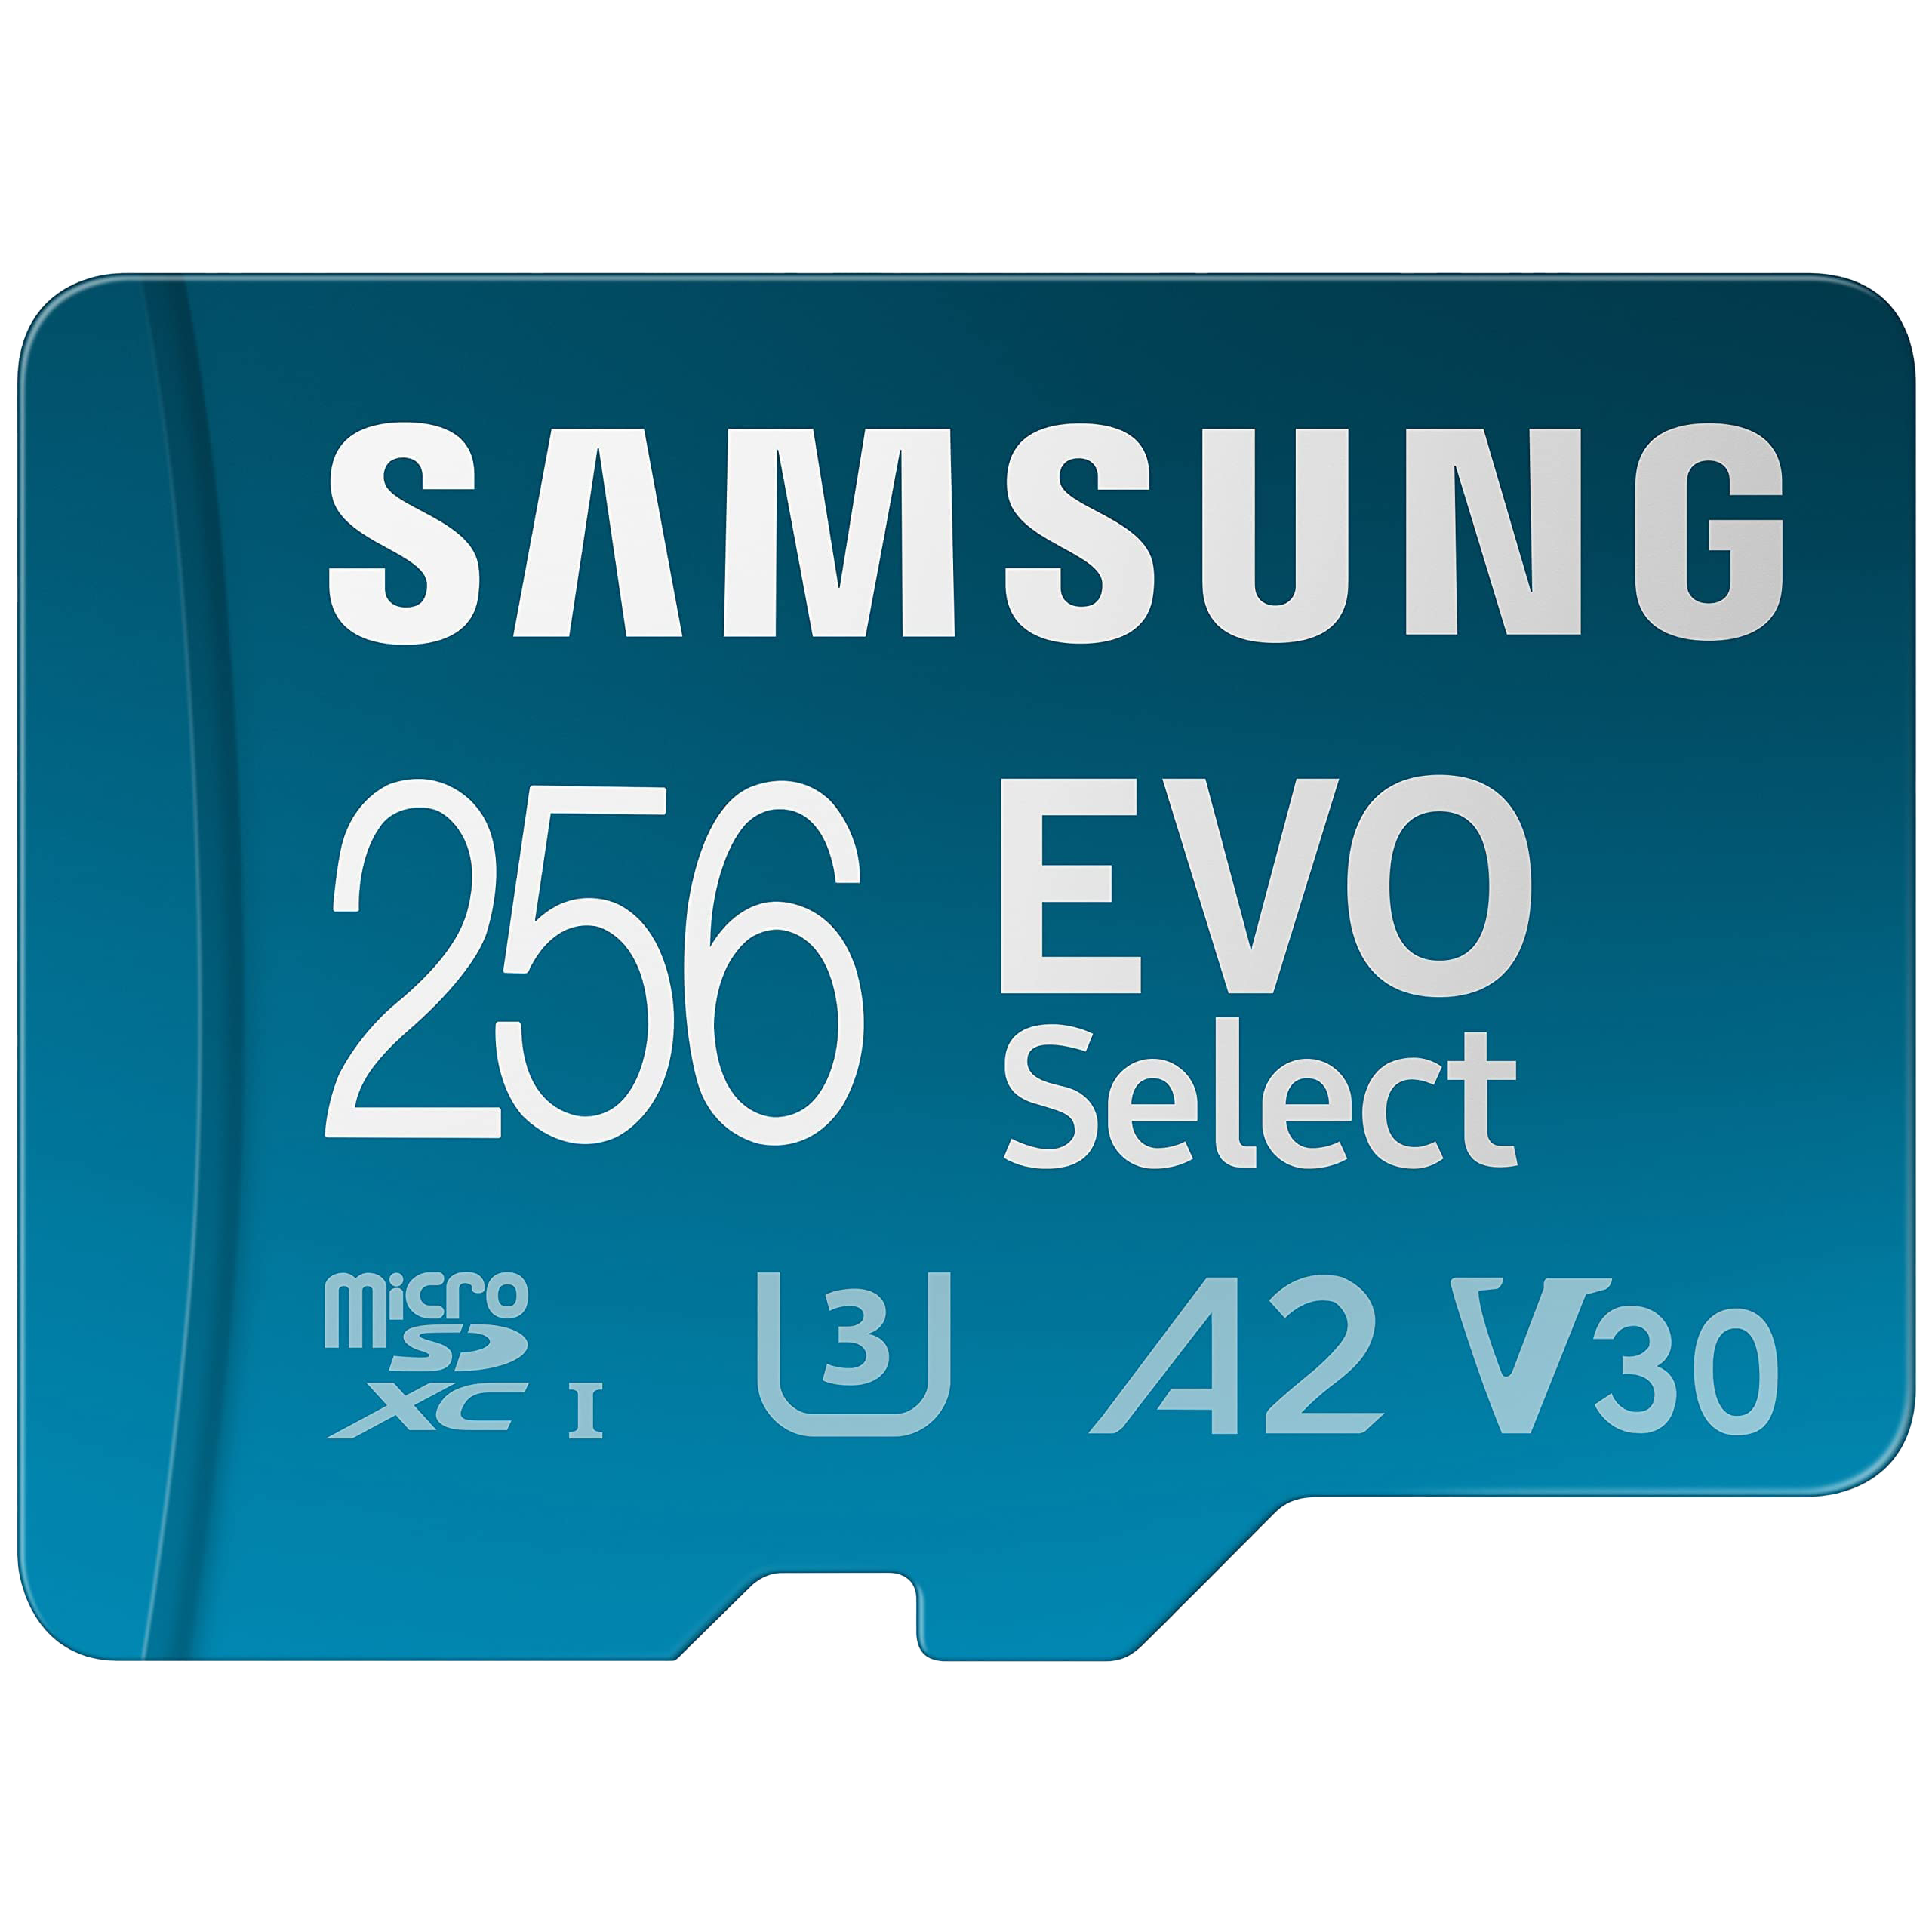 Samsung Evo Select microSD card